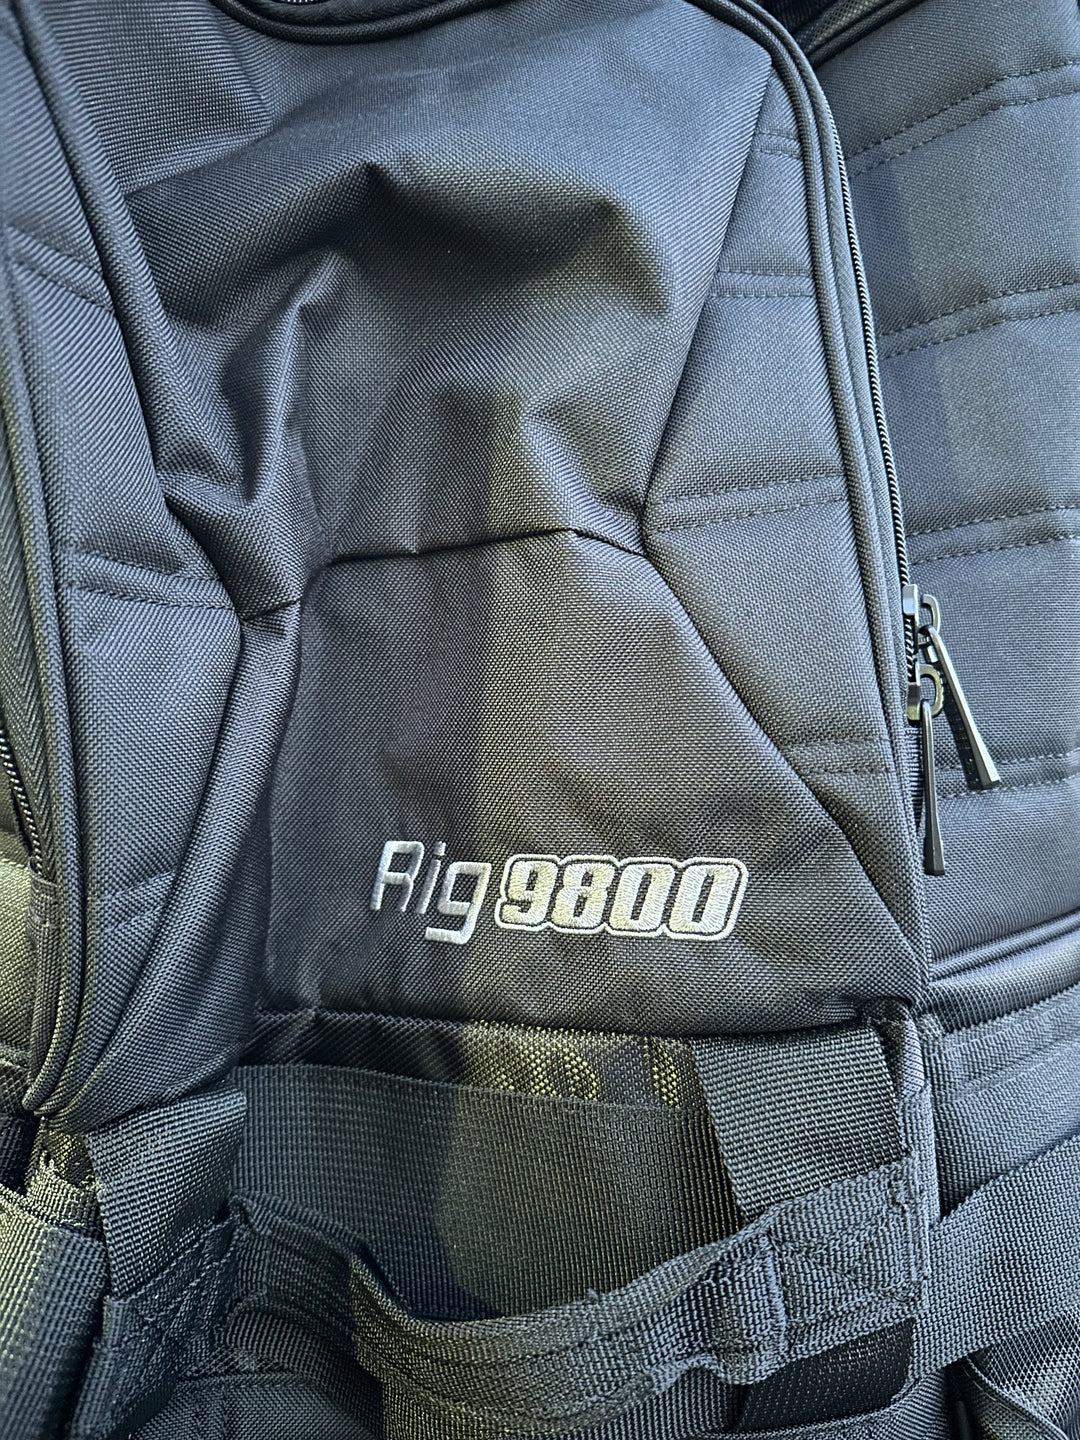 OGIO RIG 9800 Gear Bag - Stealth Black - Motor Psycho Sport